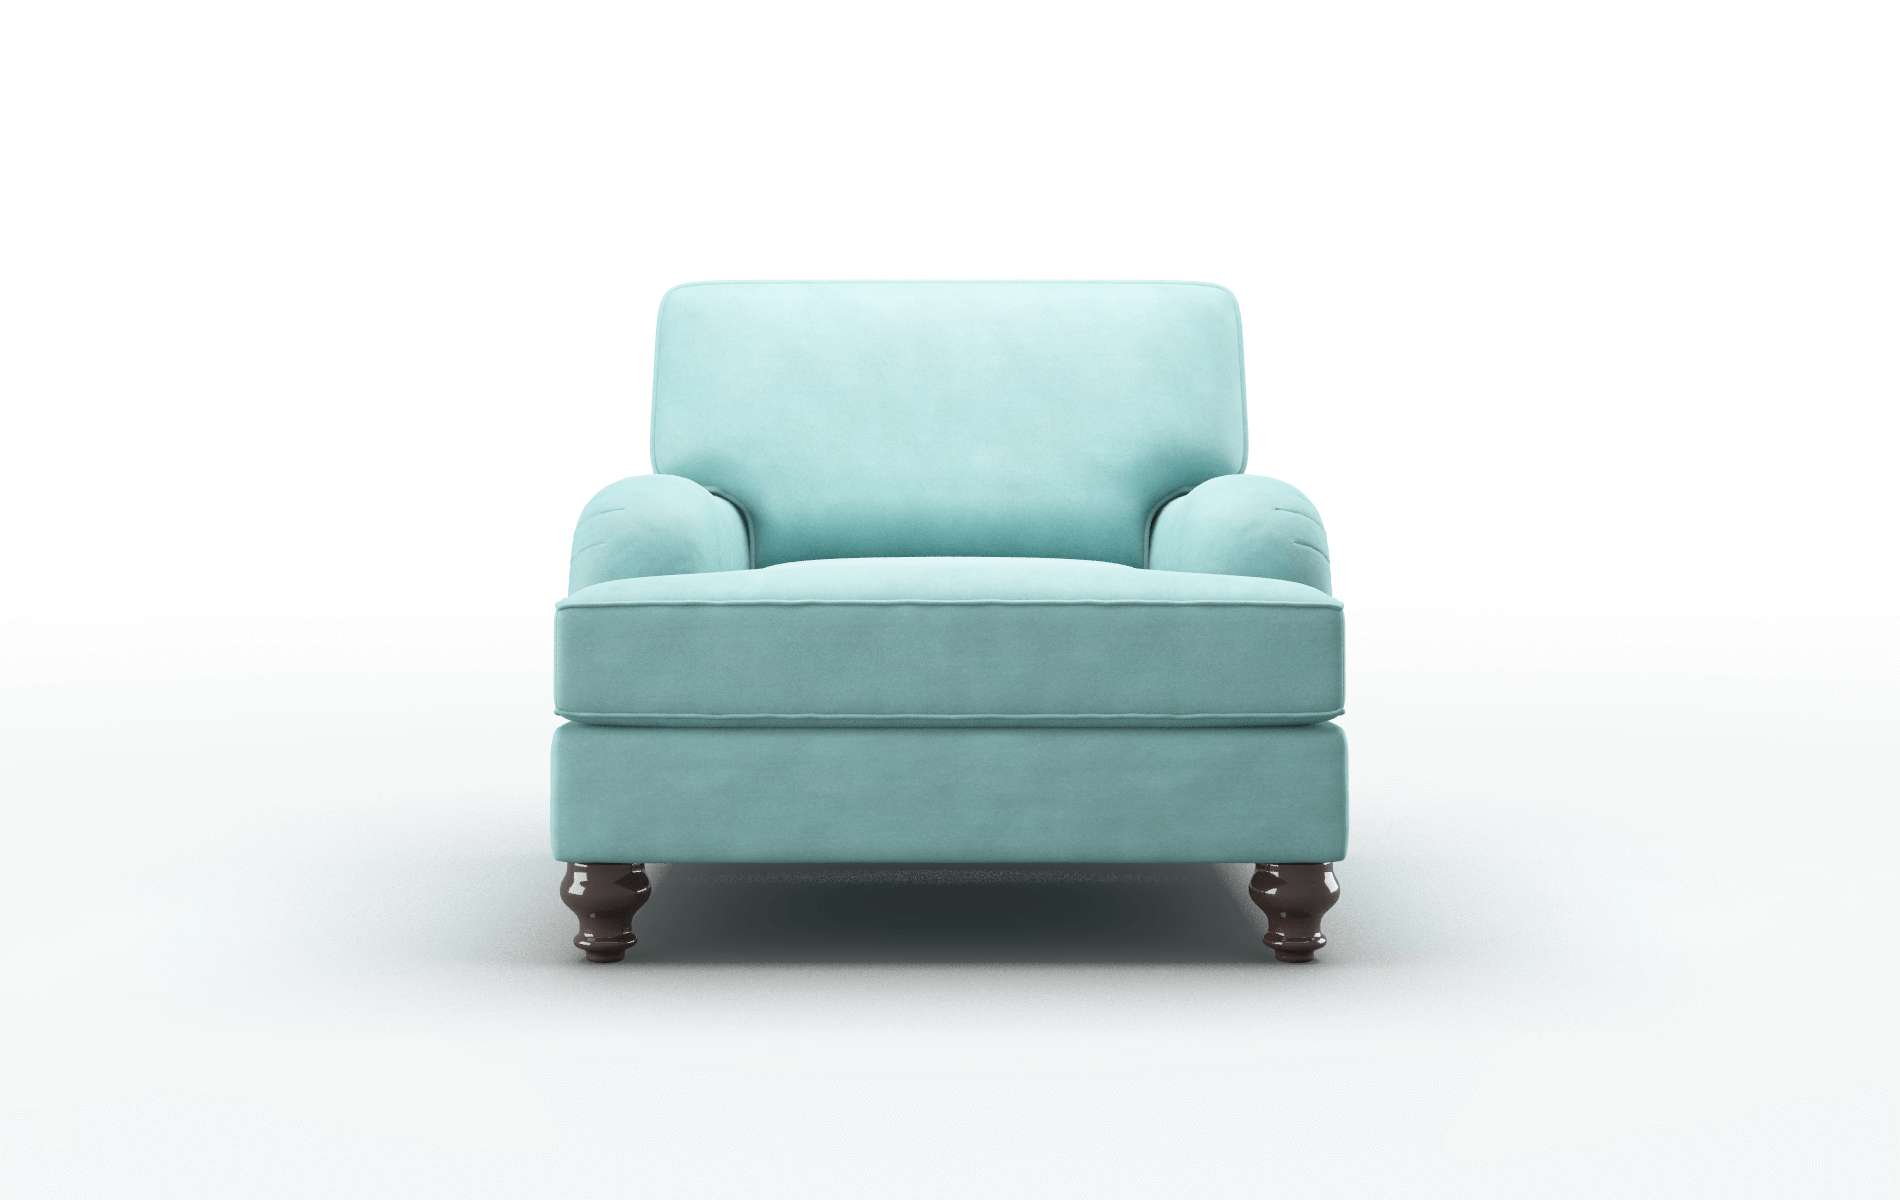 Hamilton Curious Turquoise chair espresso legs